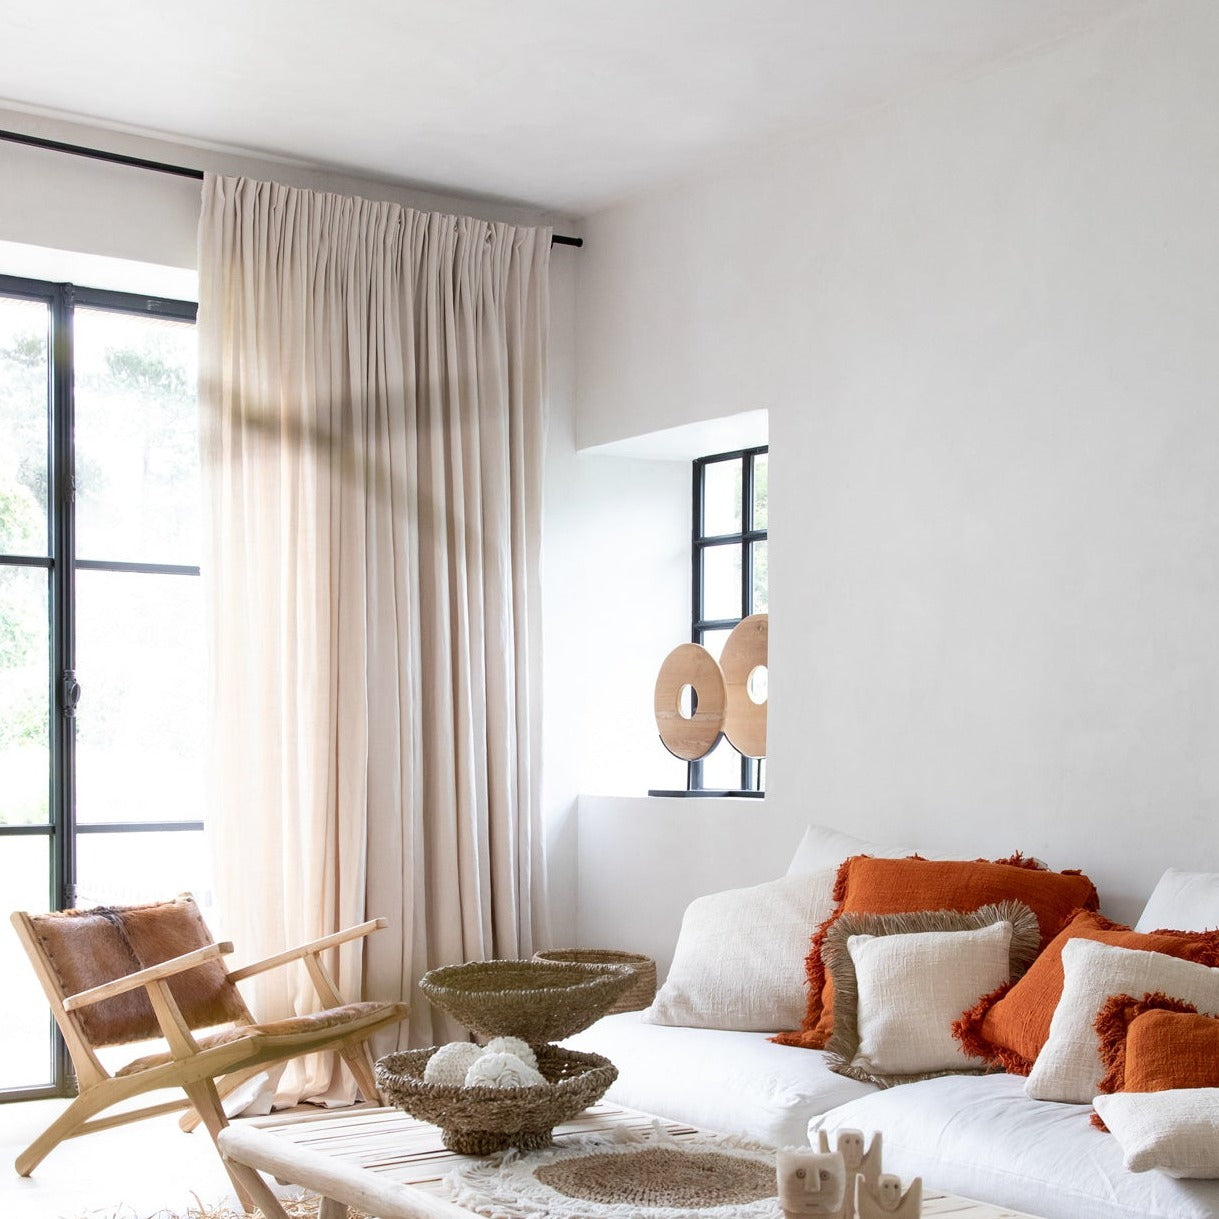 THE SAINT TROPEZ Cushion Cover Natural-White interior view